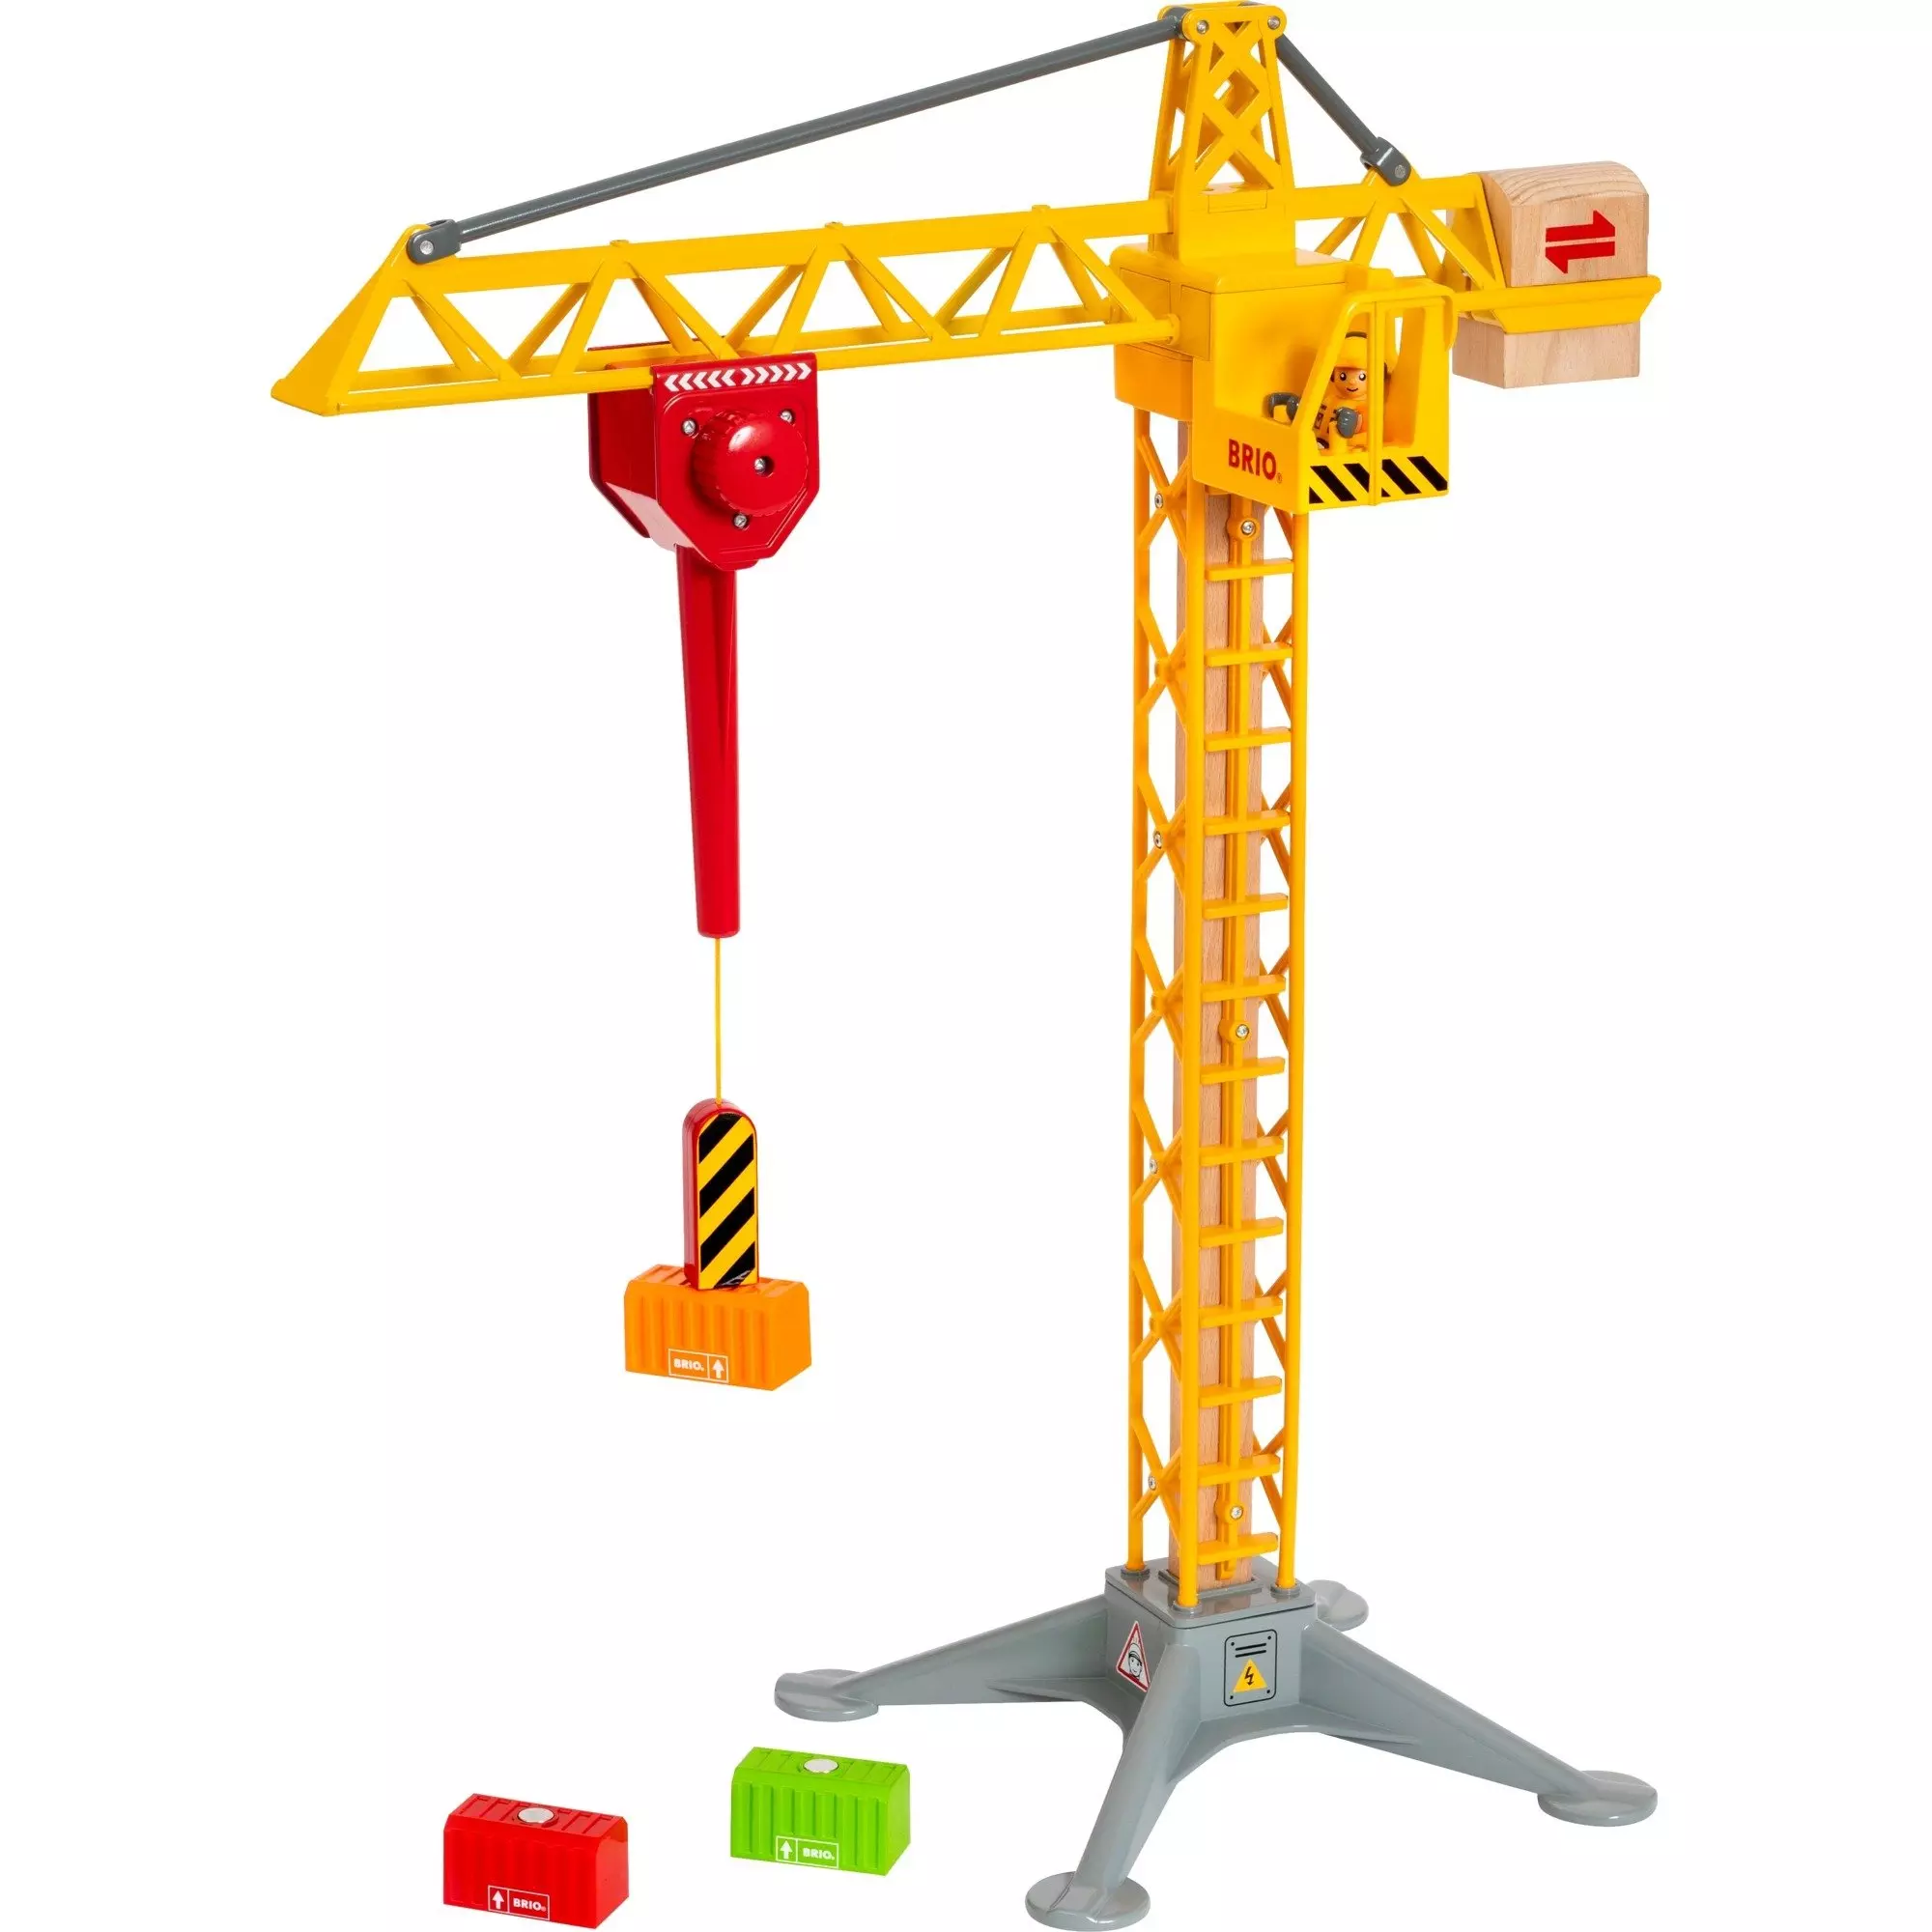 Brio Construction Crane With Lights 33835